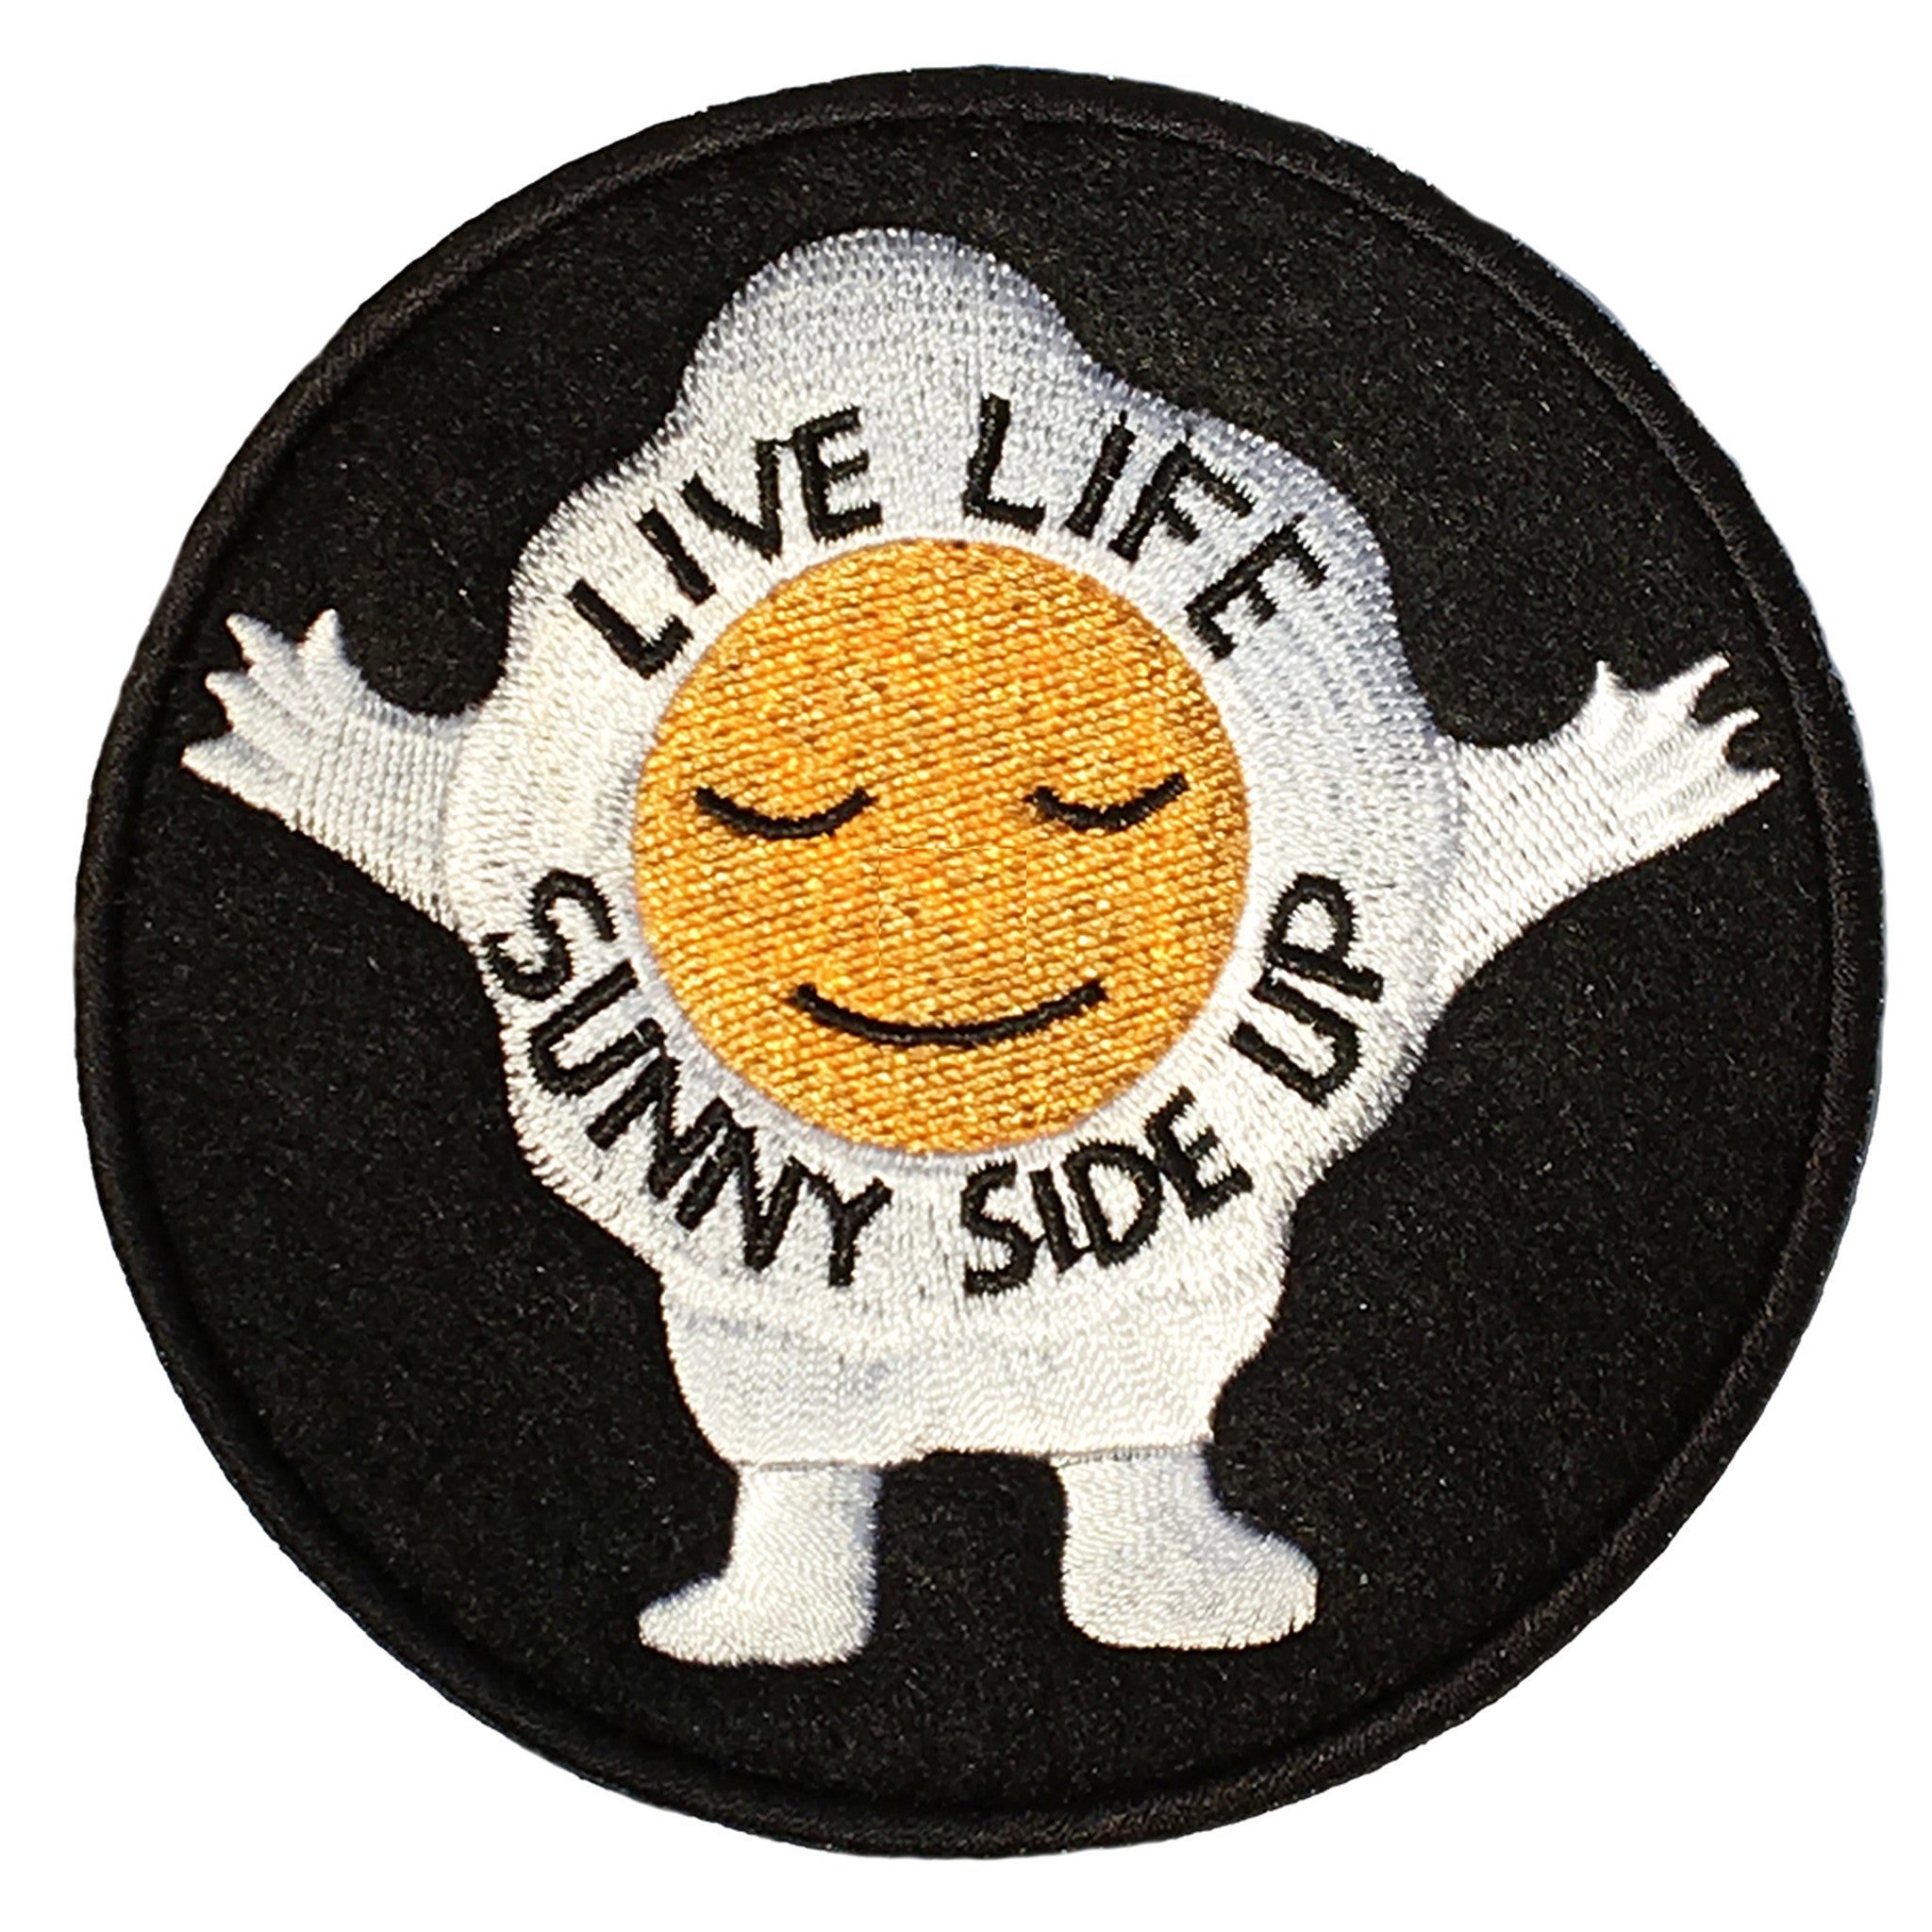 Live Life Sunny Side Up Patch